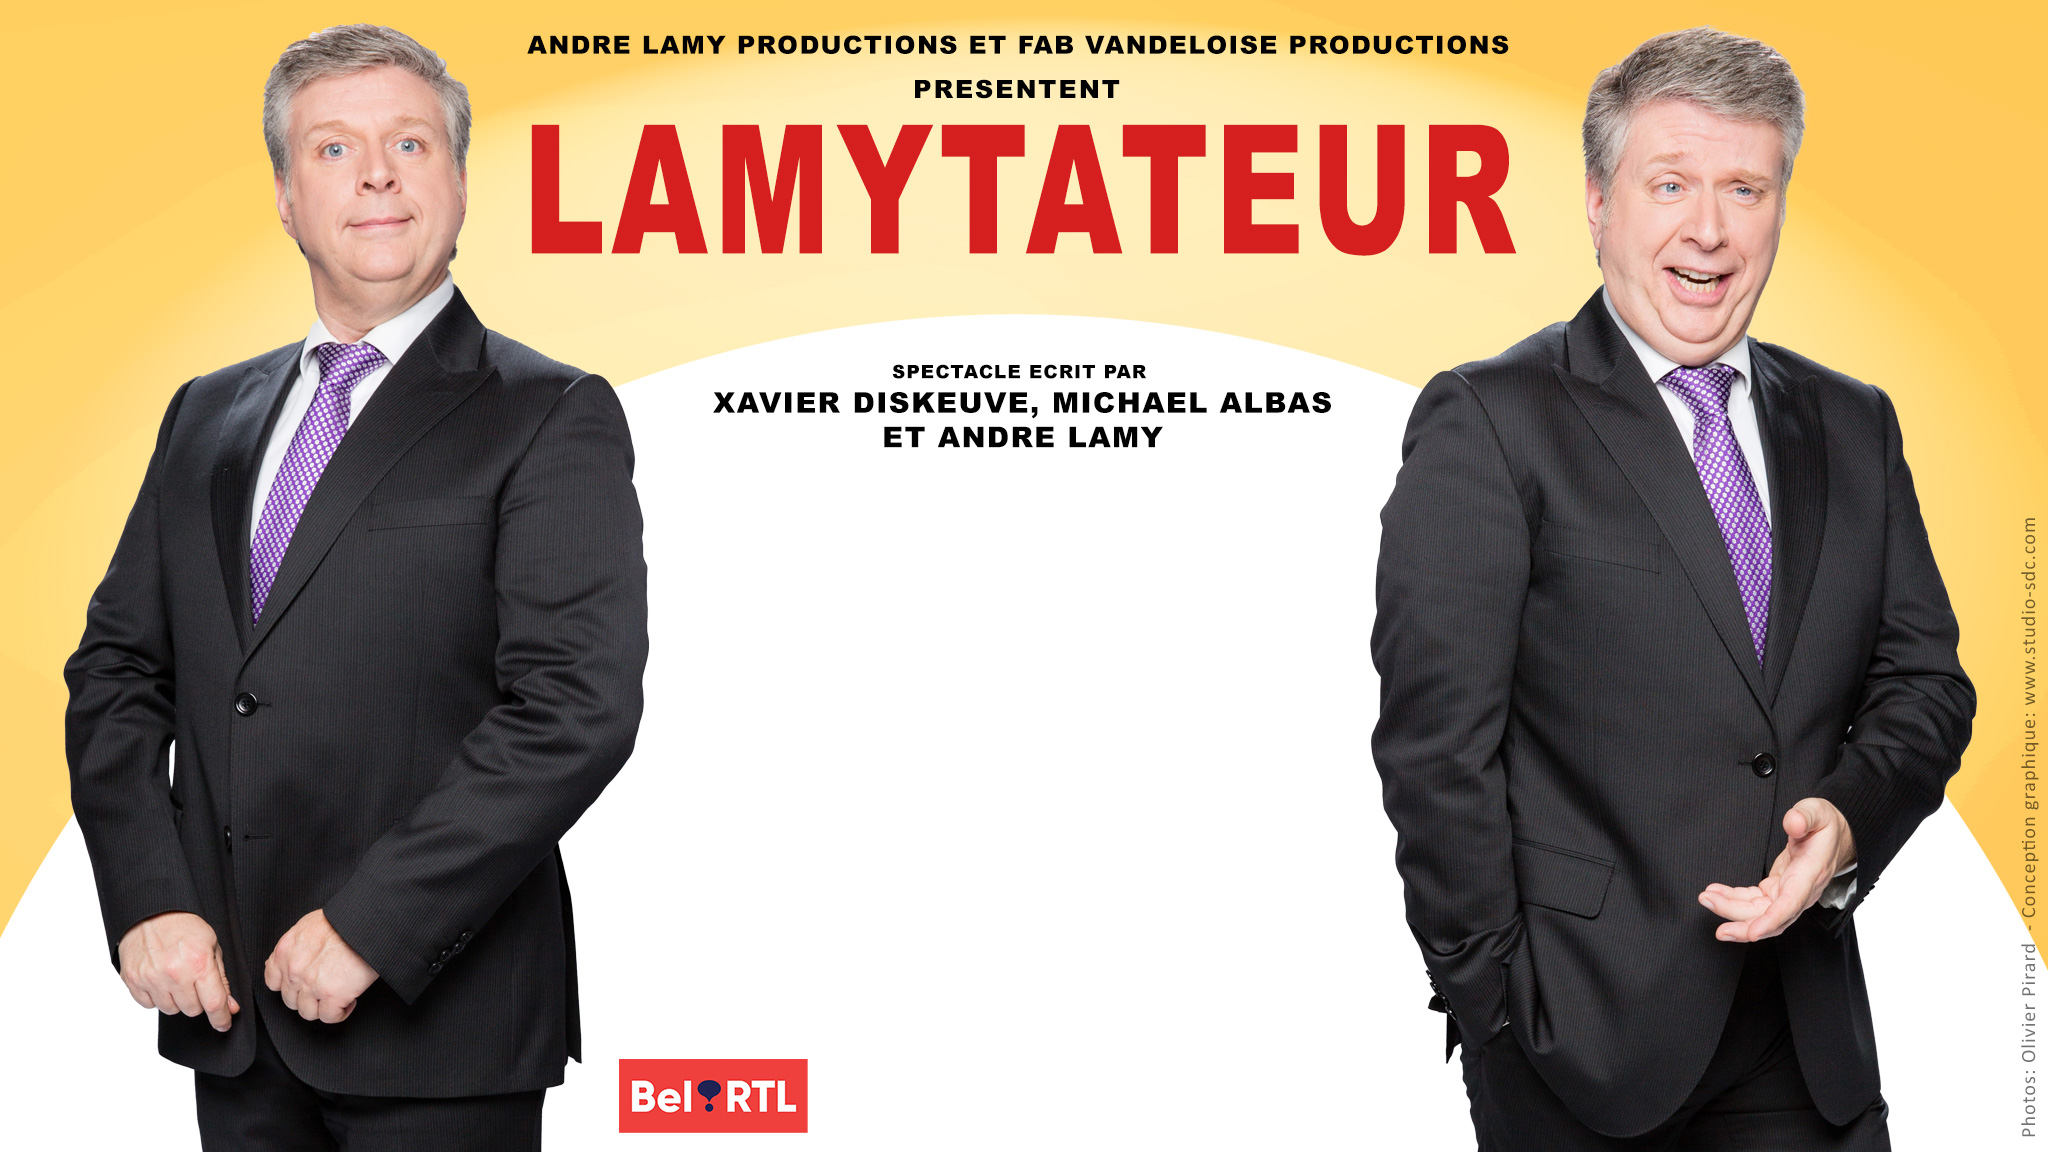 Andre Lamy - Lamytateur